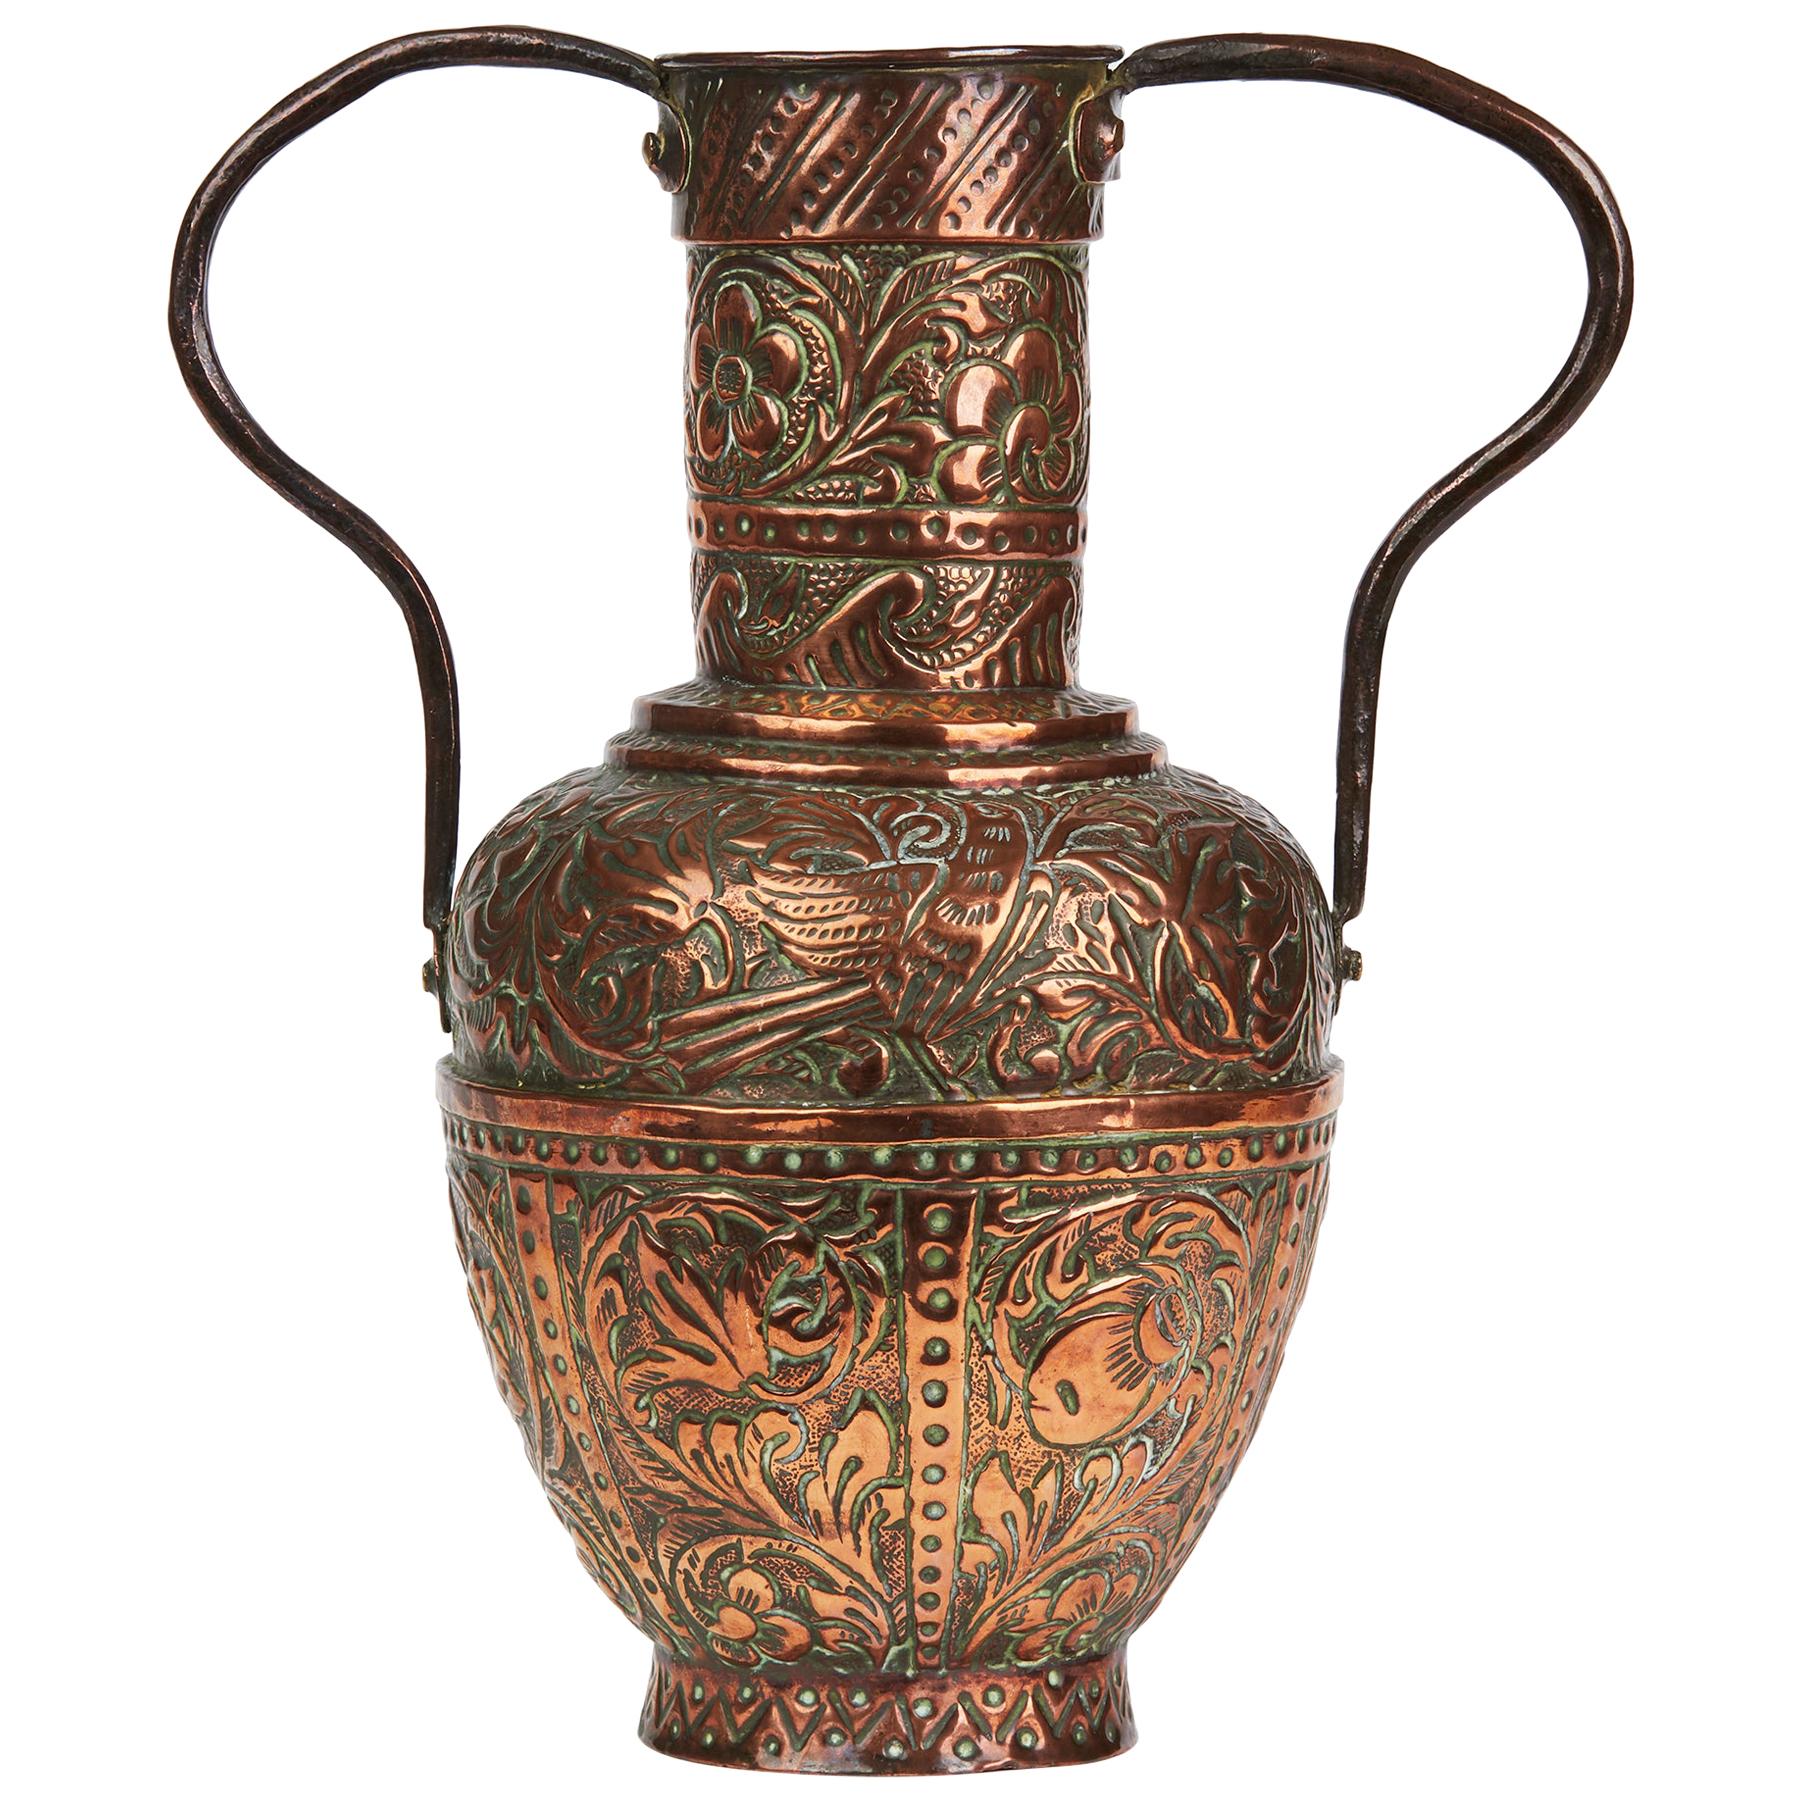 Stylish Antique Asian Twin Handled Repousse Design Copper Vase 19th Century